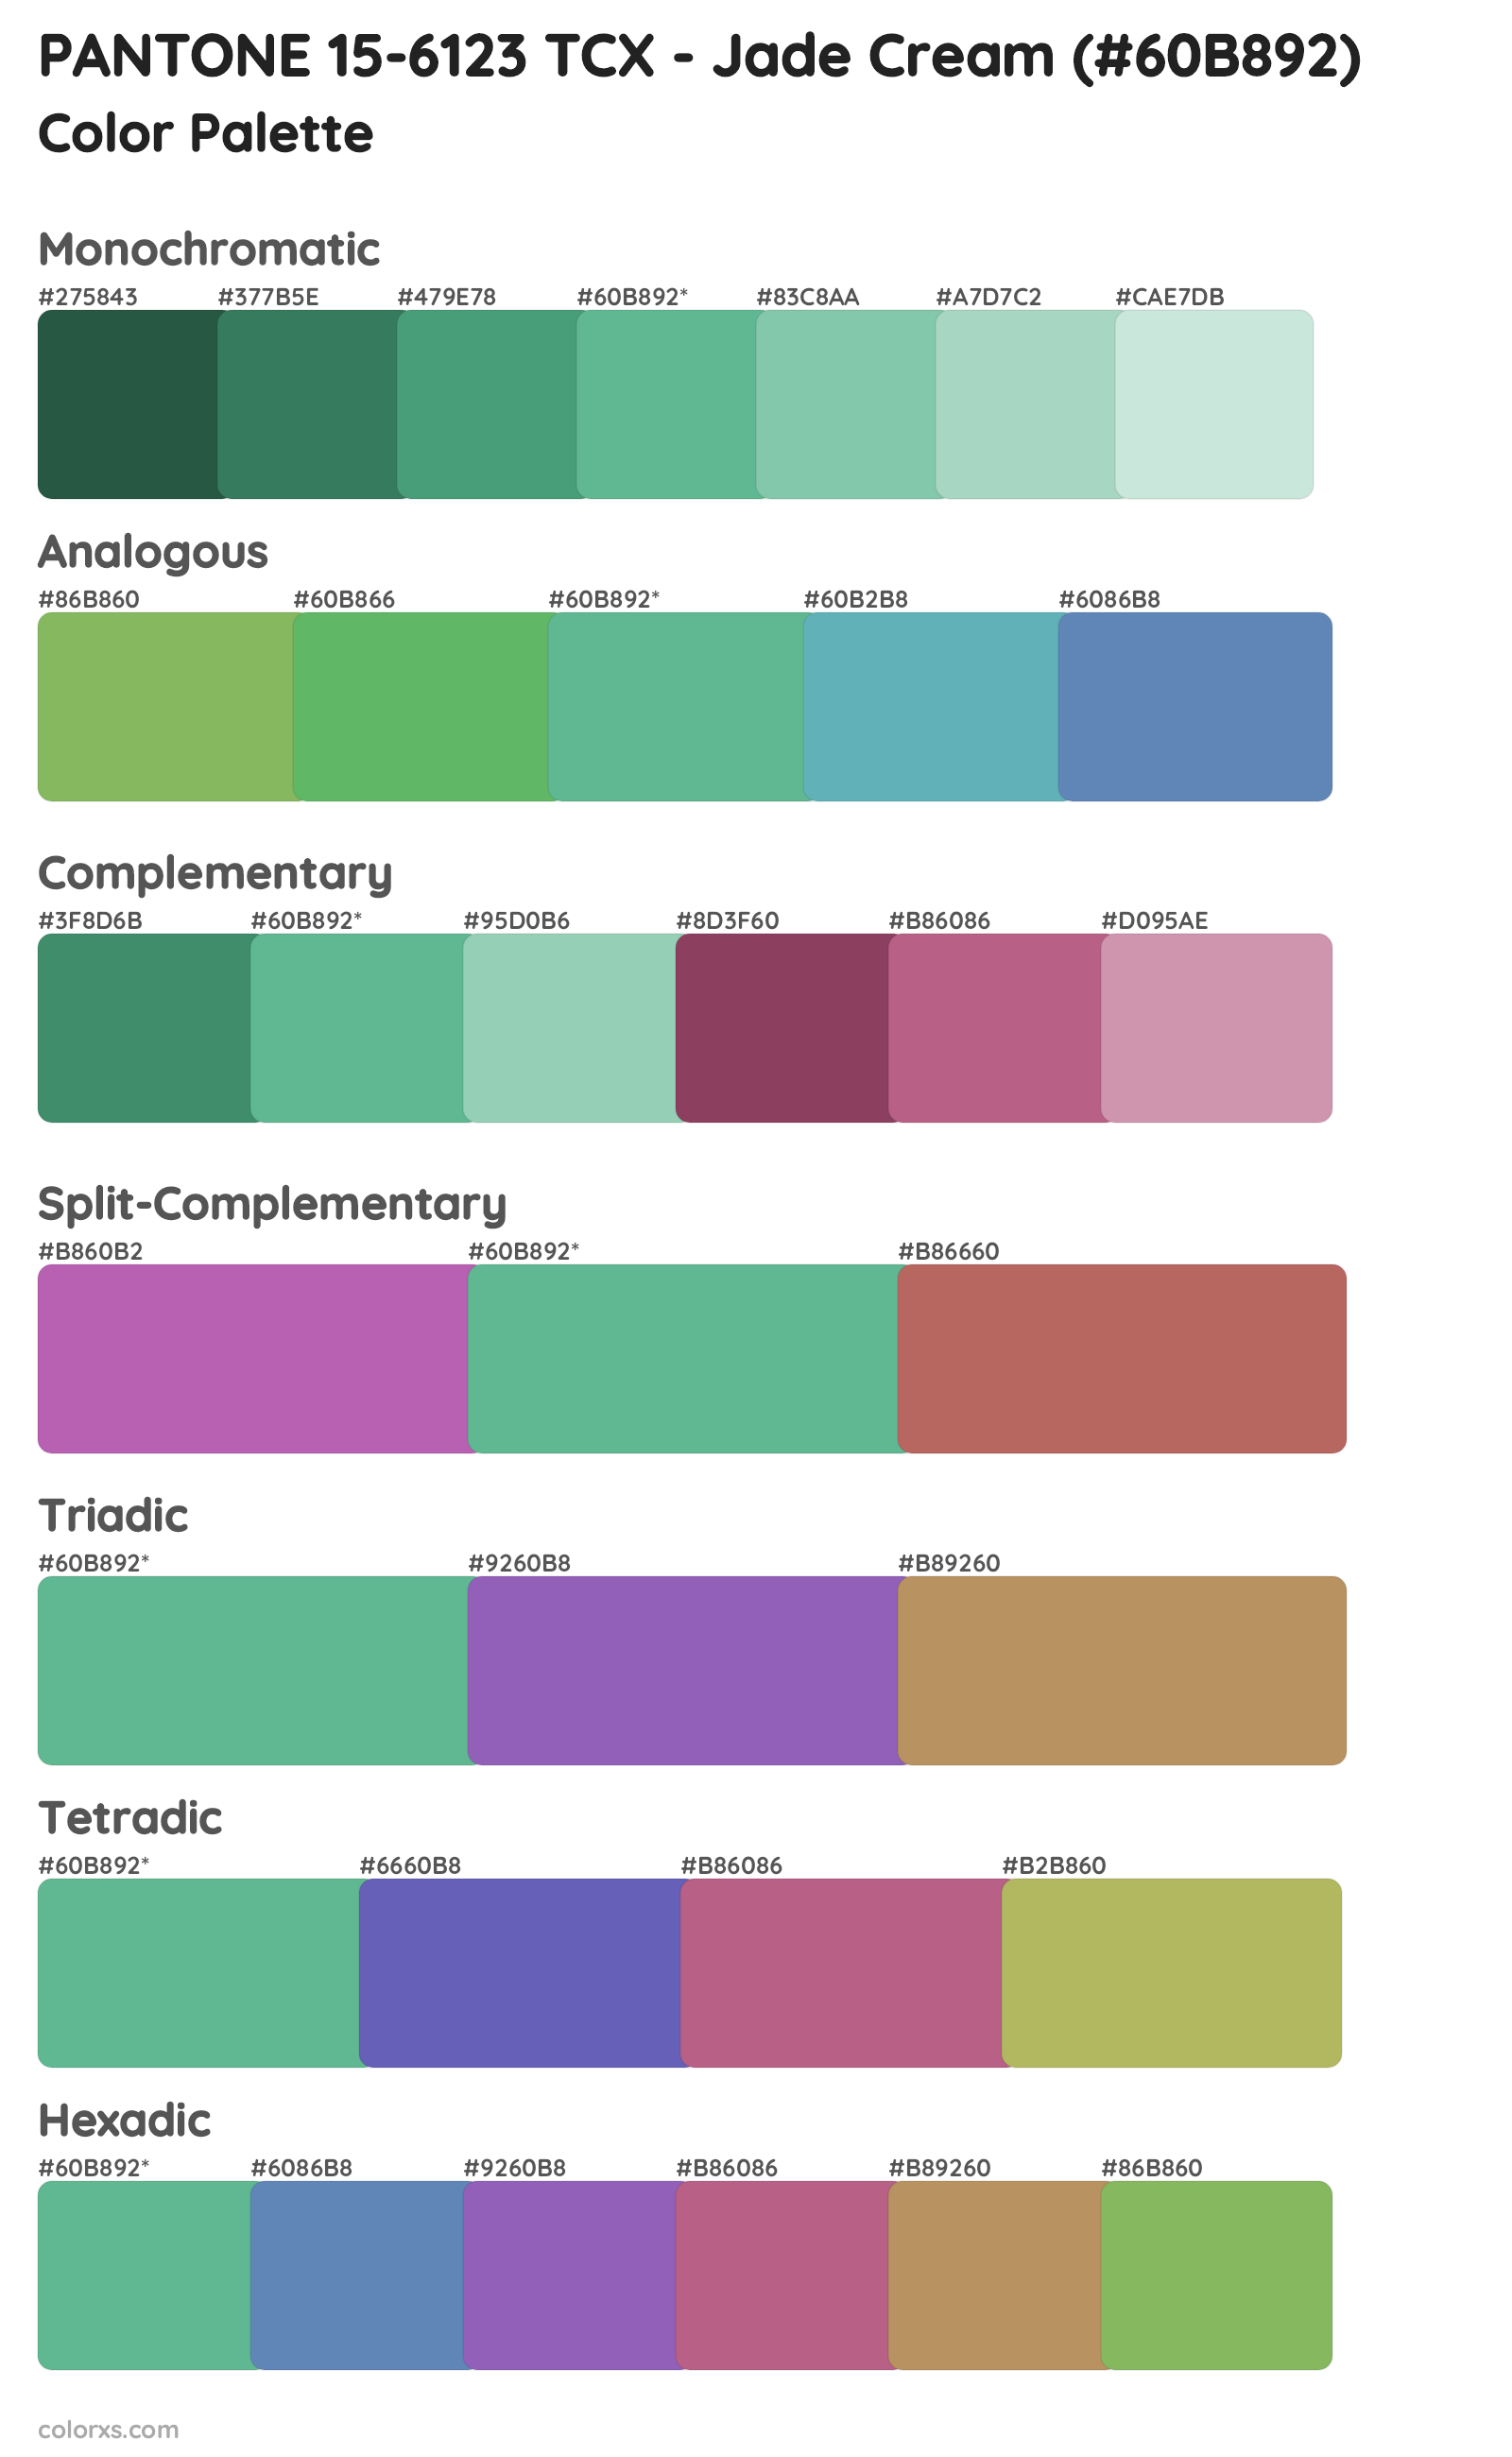 PANTONE 15-6123 TCX - Jade Cream Color Scheme Palettes